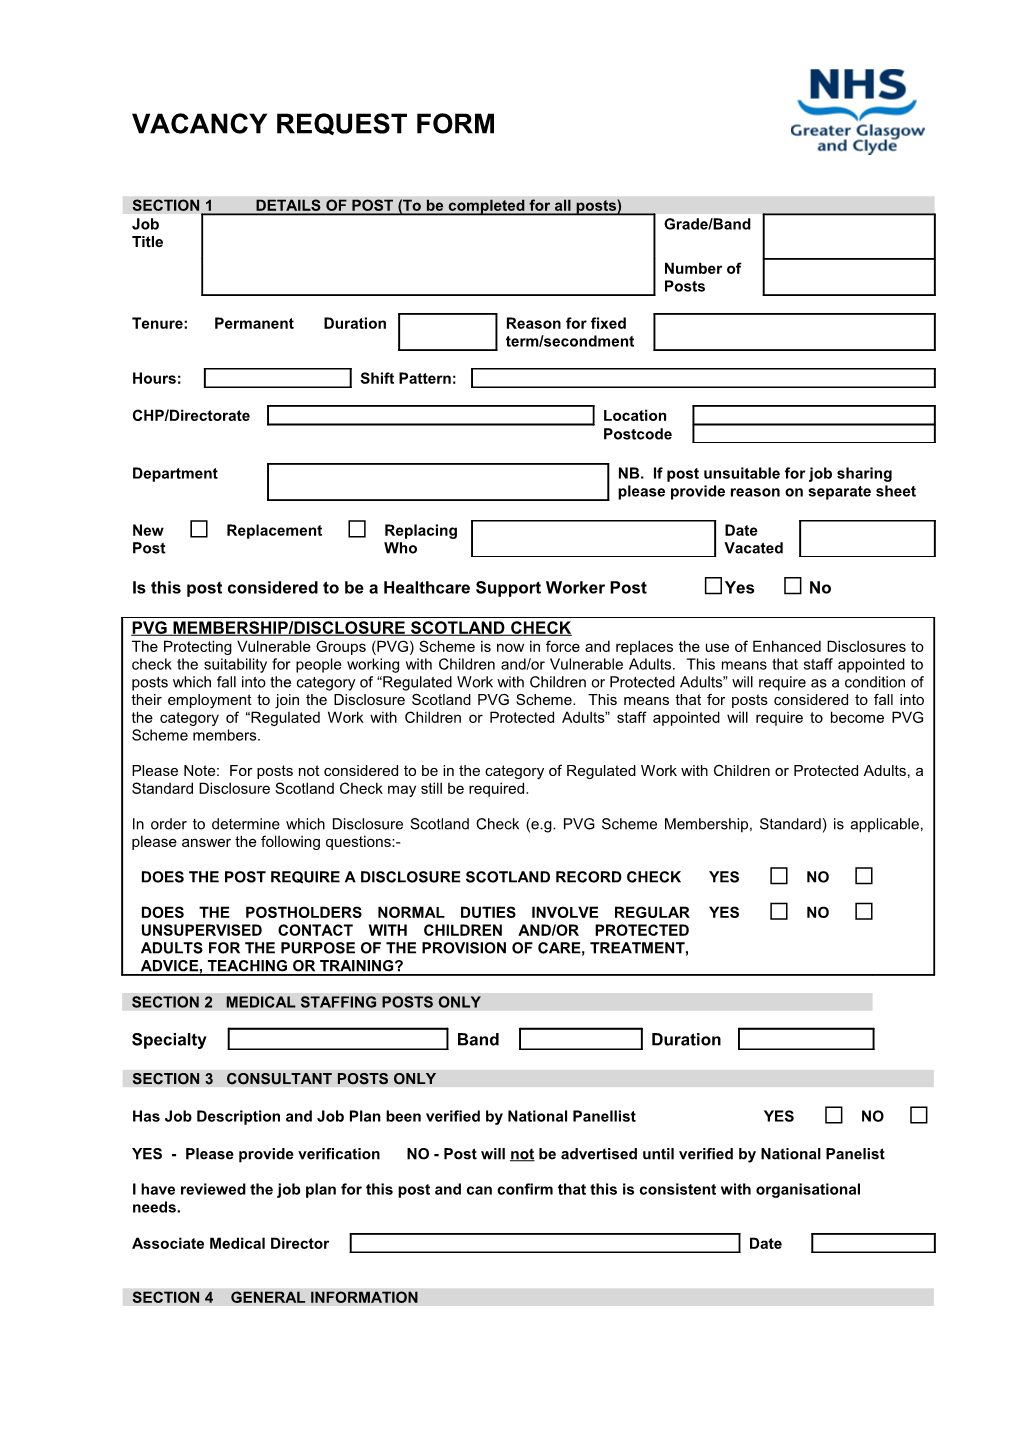 Vacancy Request Form April 11